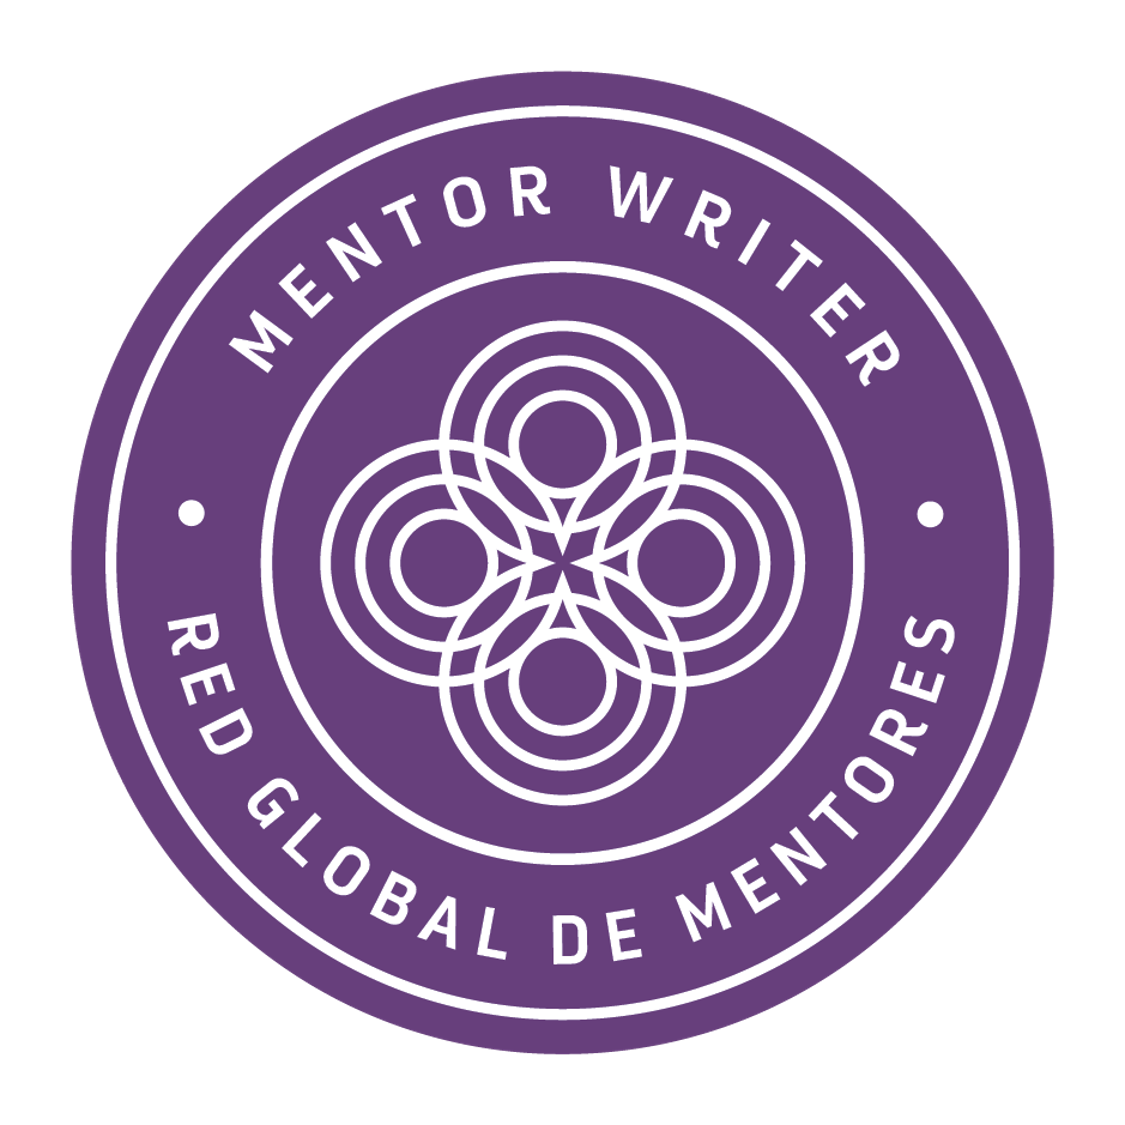 SELLO - CERTIFIED MENTOR WRITER - julio de 2021.png